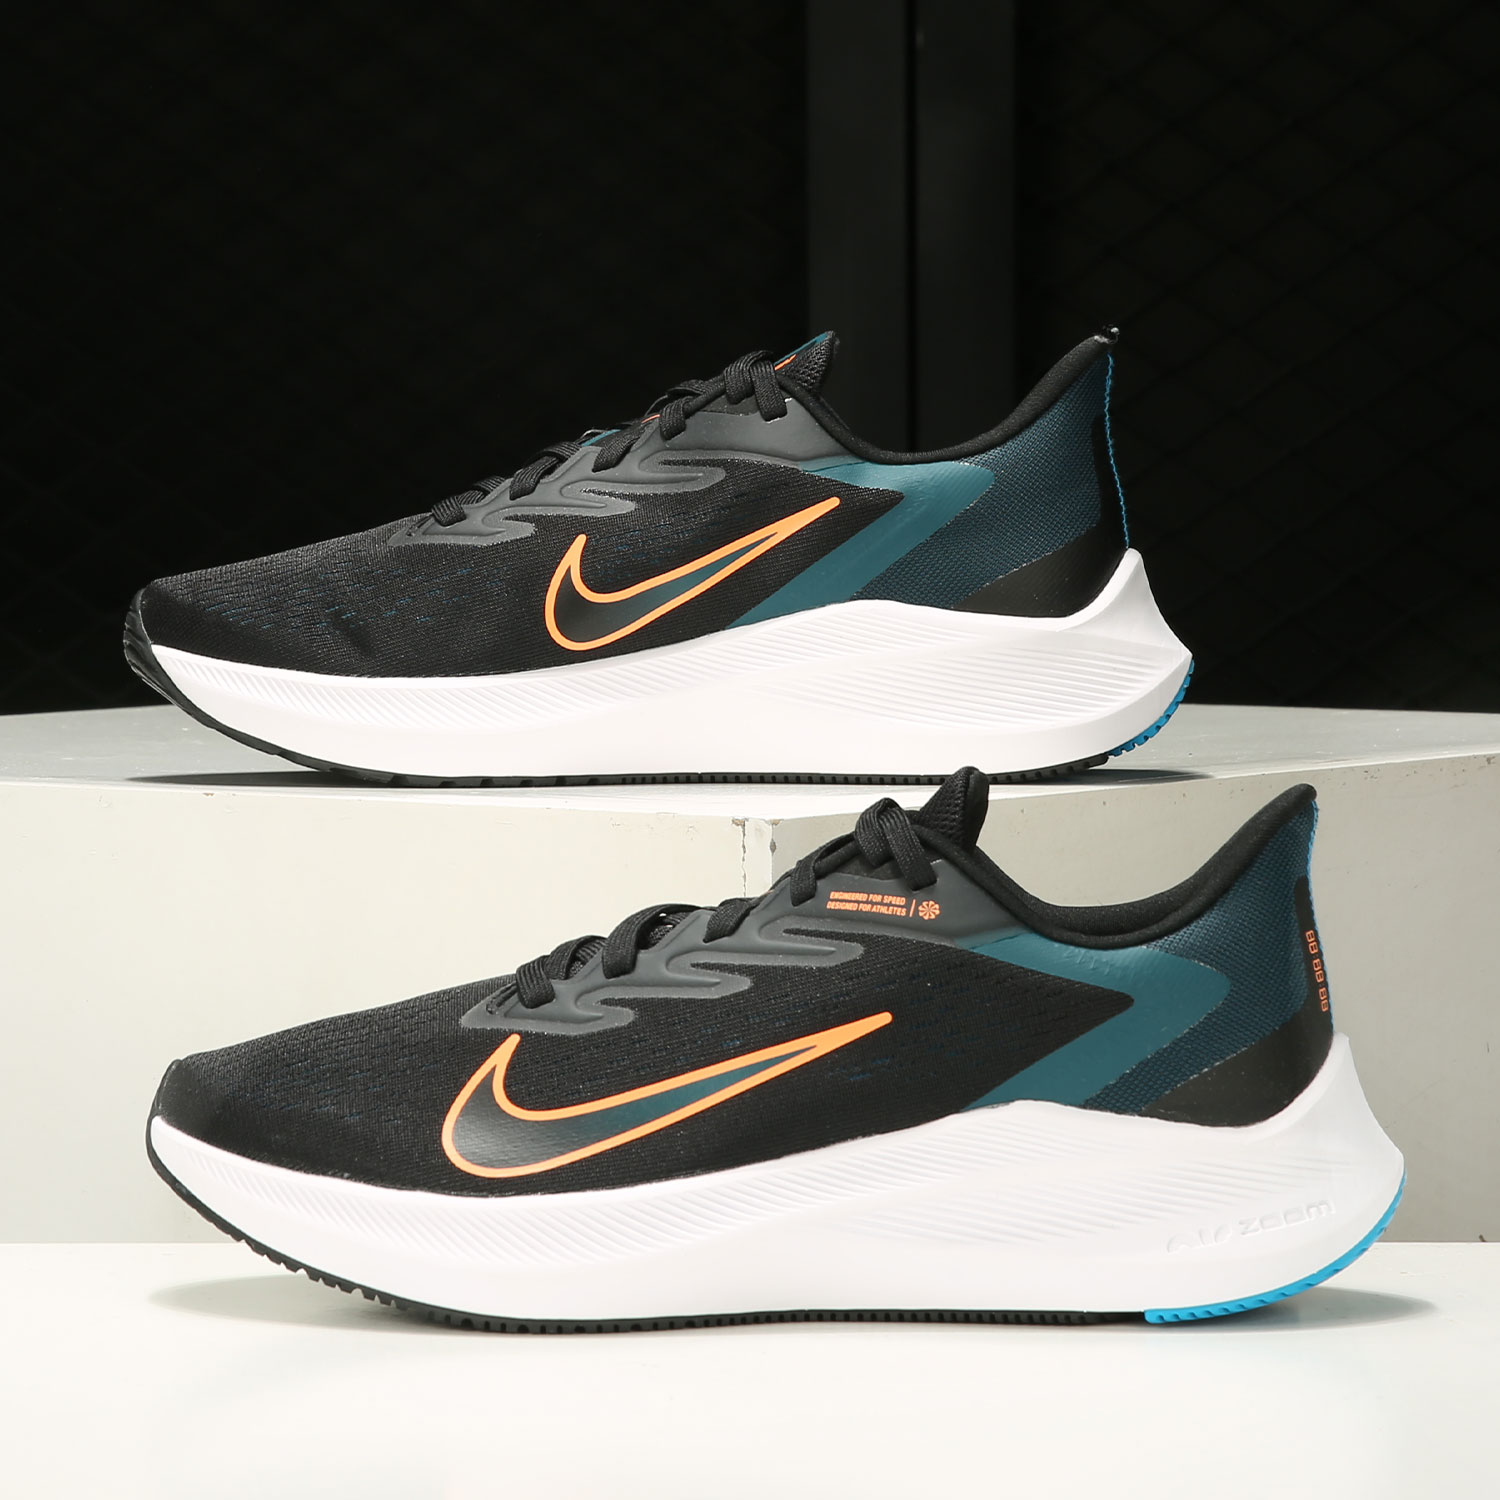 Nike/耐克正品 ZOOM WINFLO 7 男子缓震跑步运动鞋 CJ0291-013 运动鞋new 跑步鞋 原图主图